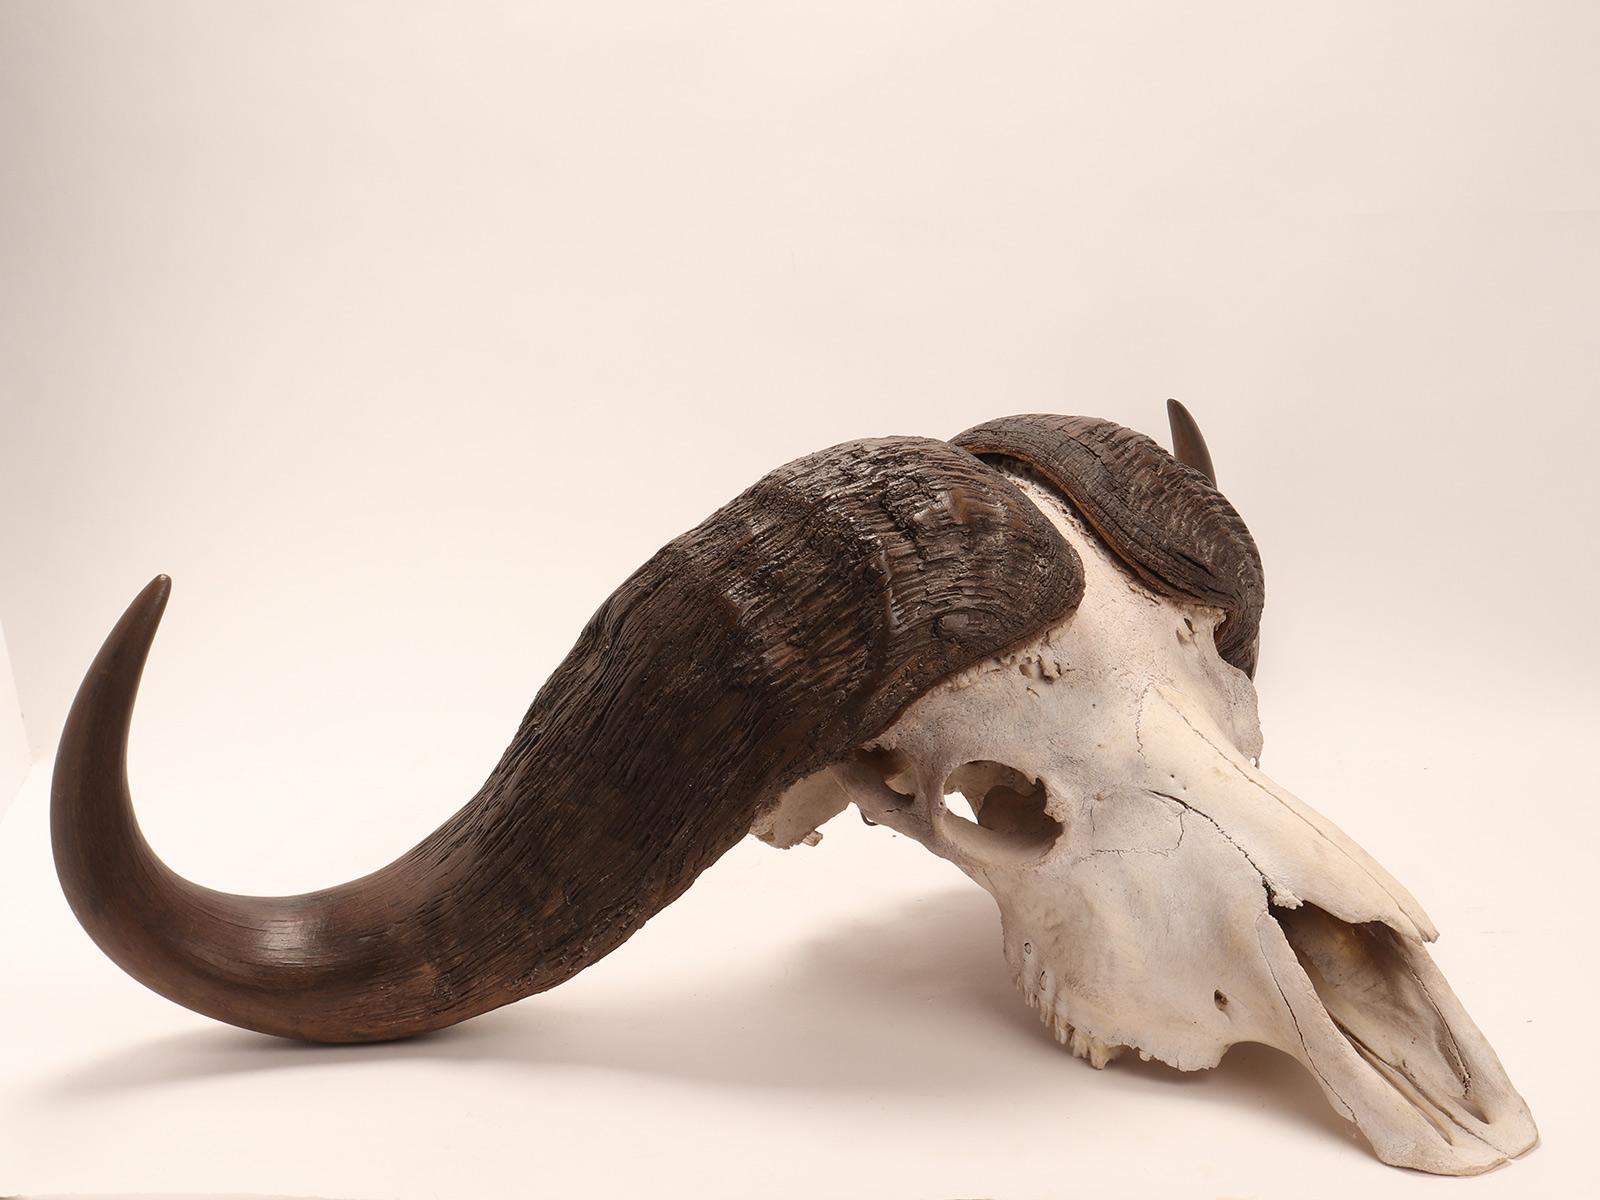 Bone Natural Specimen a Trophy of a Bufalo Skull, Africa, 1890